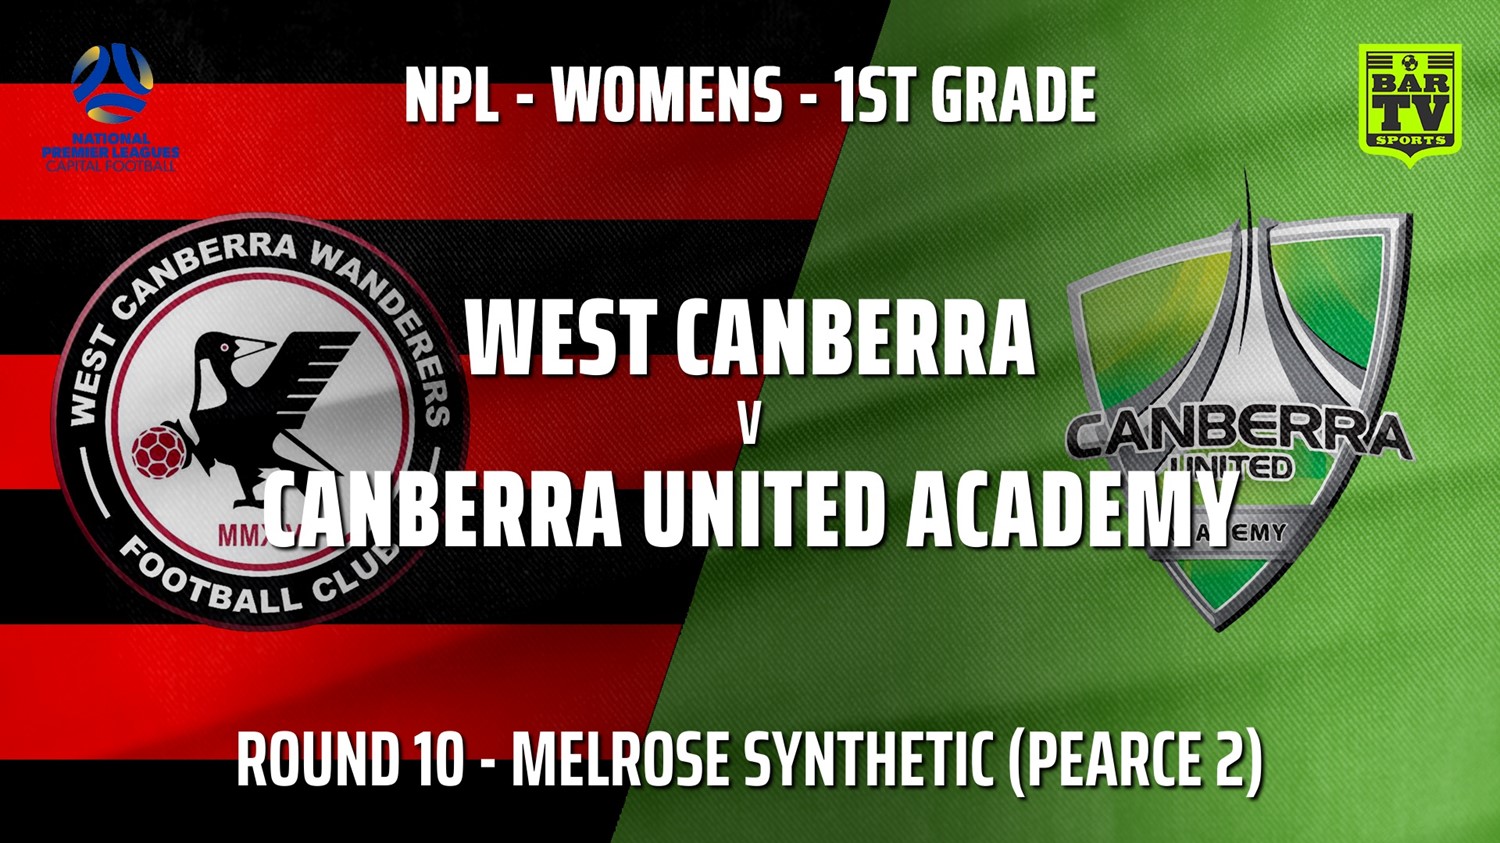 210620-Capital Womens Round 10 - West Canberra Wanderers FC (women) v Canberra United Academy Minigame Slate Image